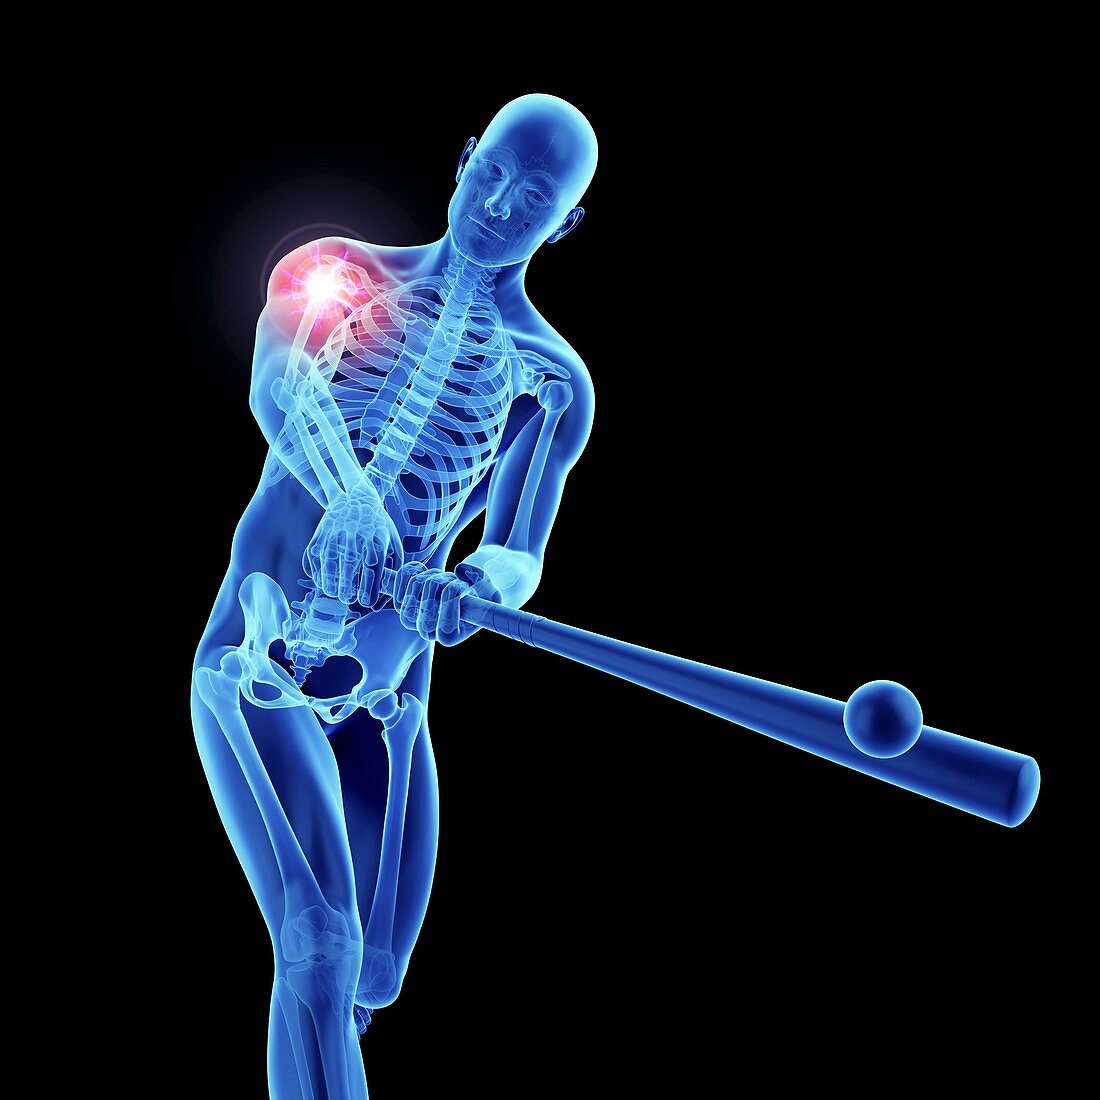 Illustration of an athlete's painful shoulder